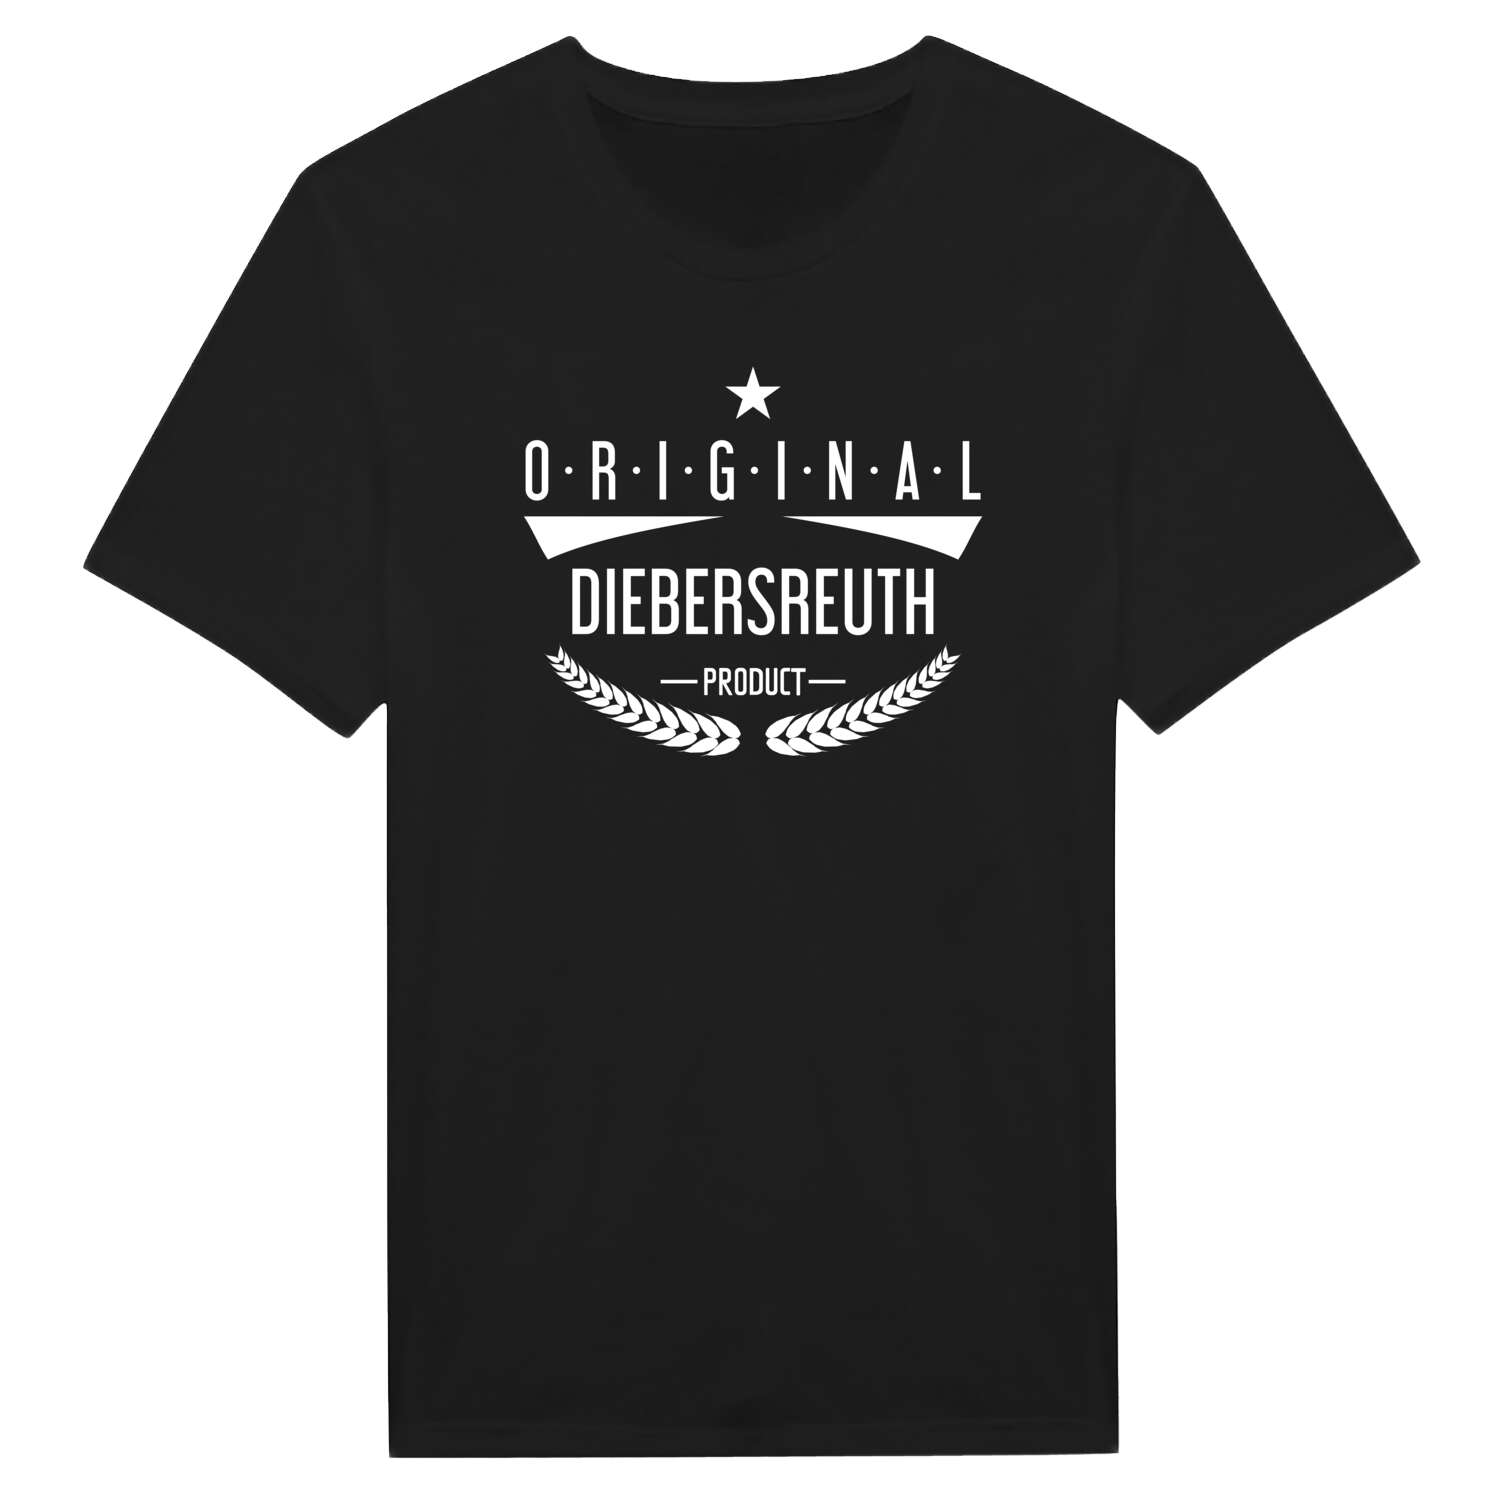 Diebersreuth T-Shirt »Original Product«